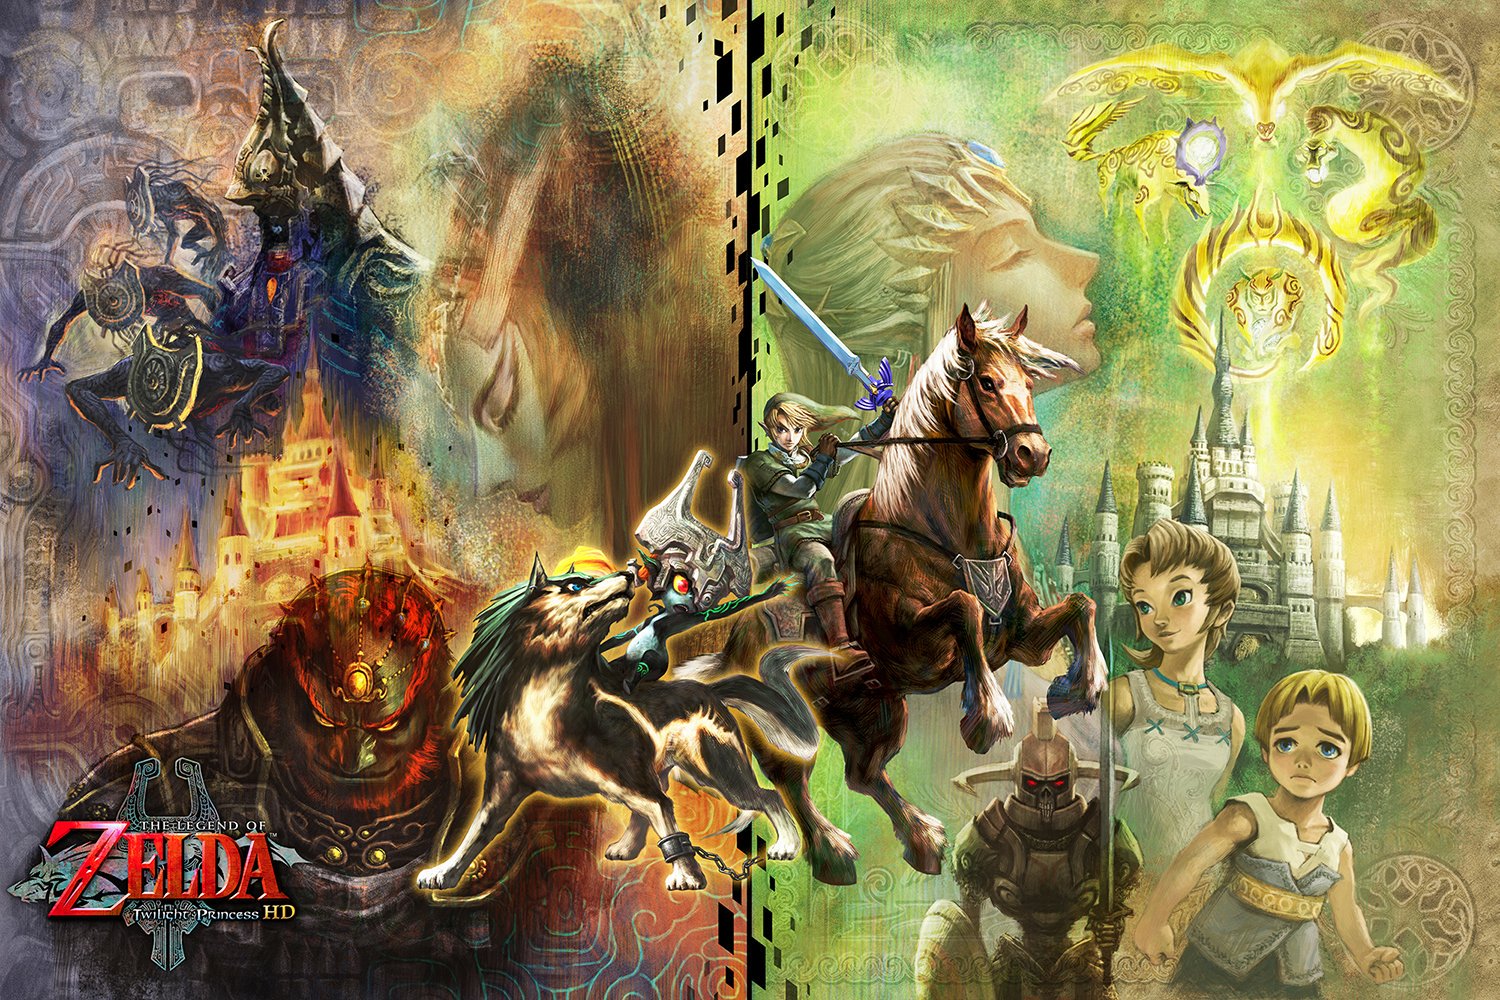 Amazing The Legend Of Zelda: Twilight Princess Pictures & Backgrounds